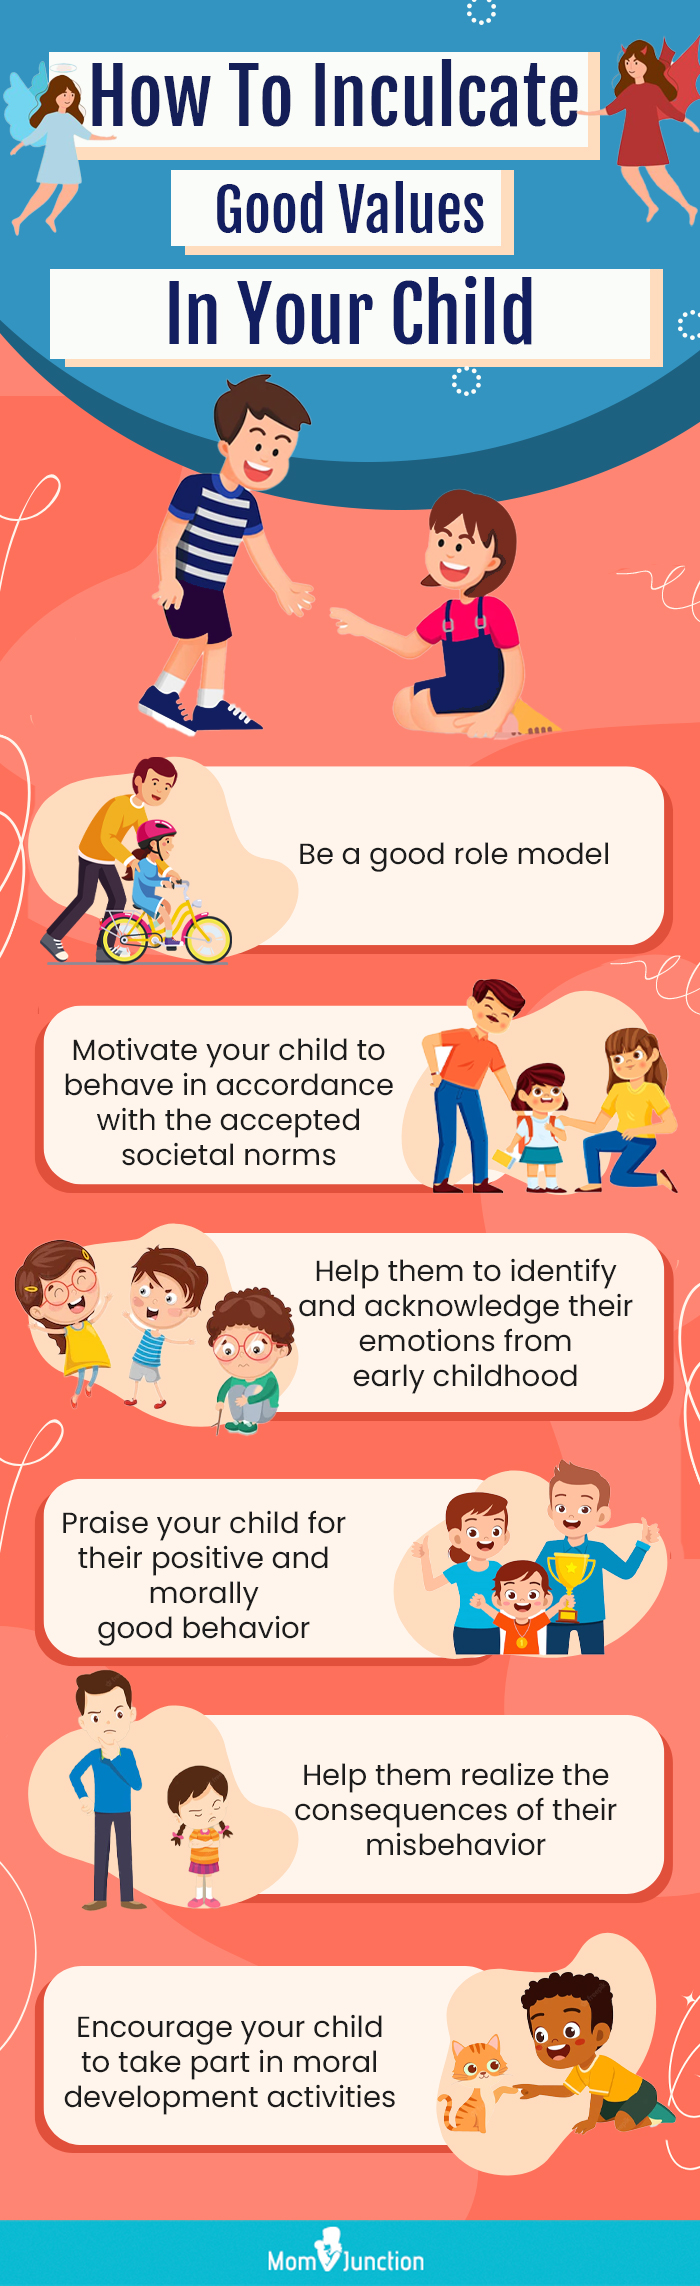 good moral values for children